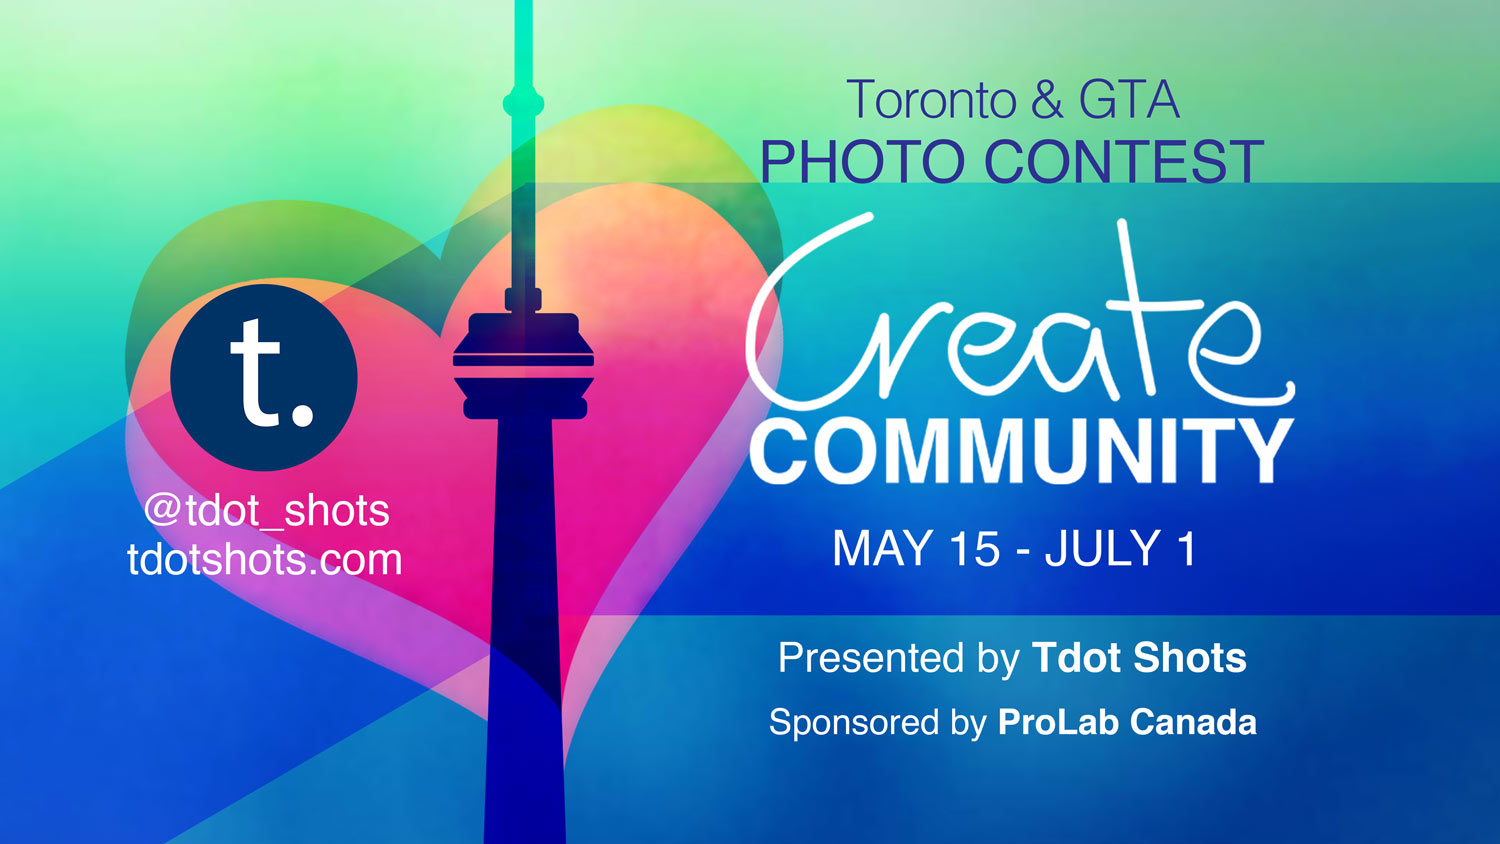 Tdot Shots Create Community Photo Contest 2020